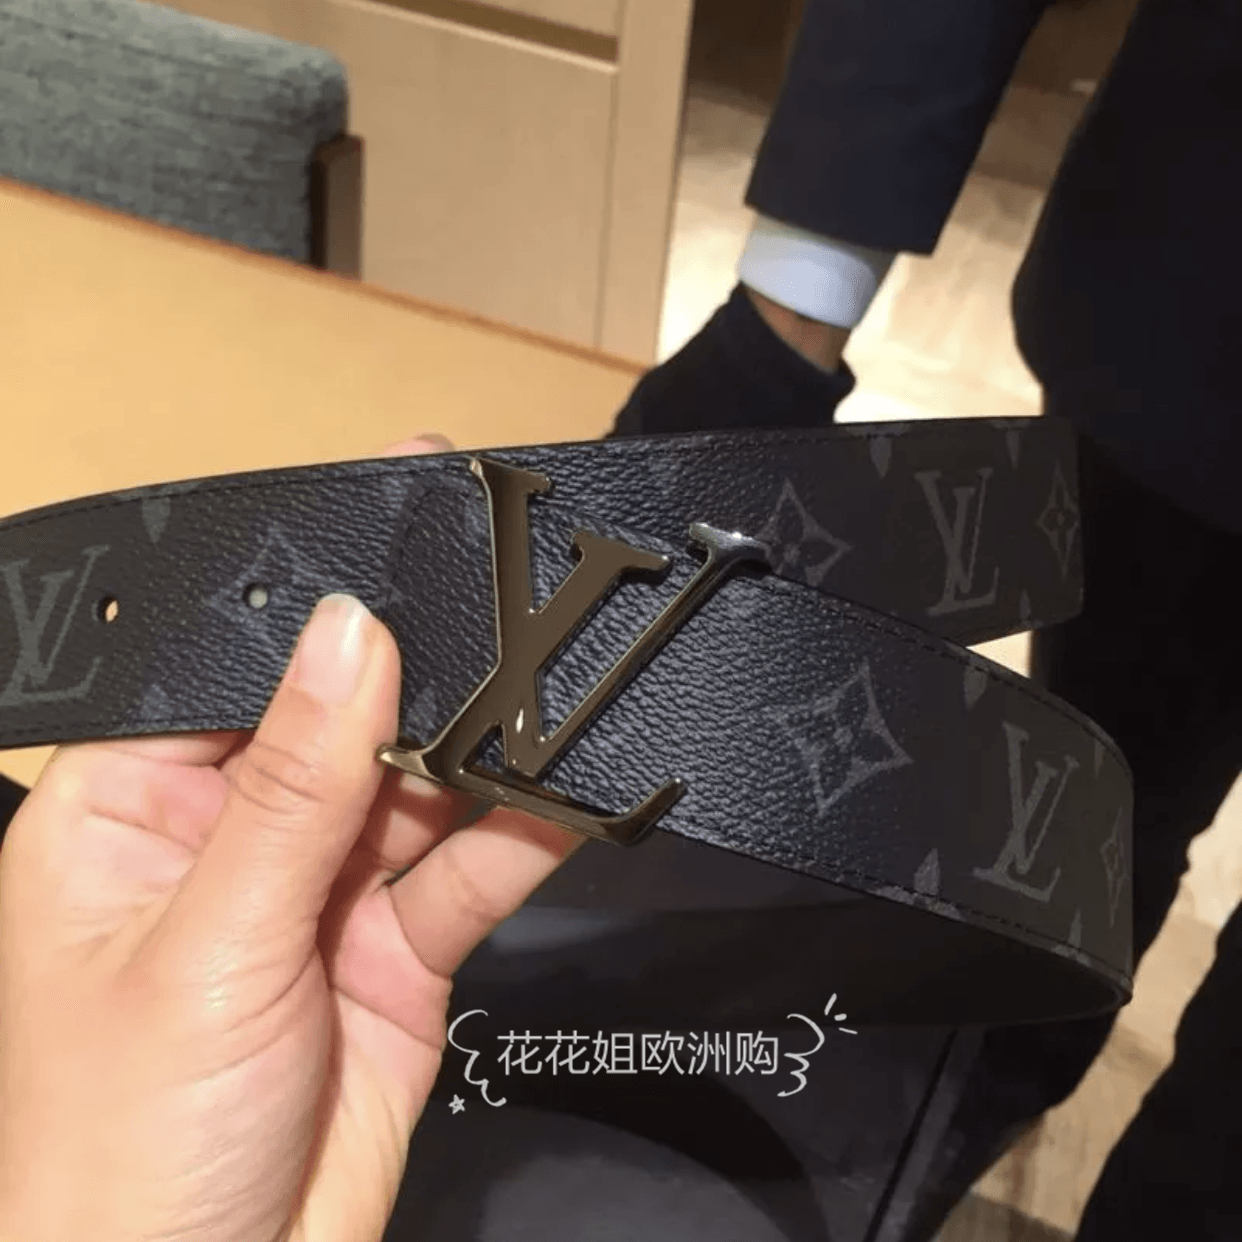 Upcycled LV belt buckle – Chic Verte